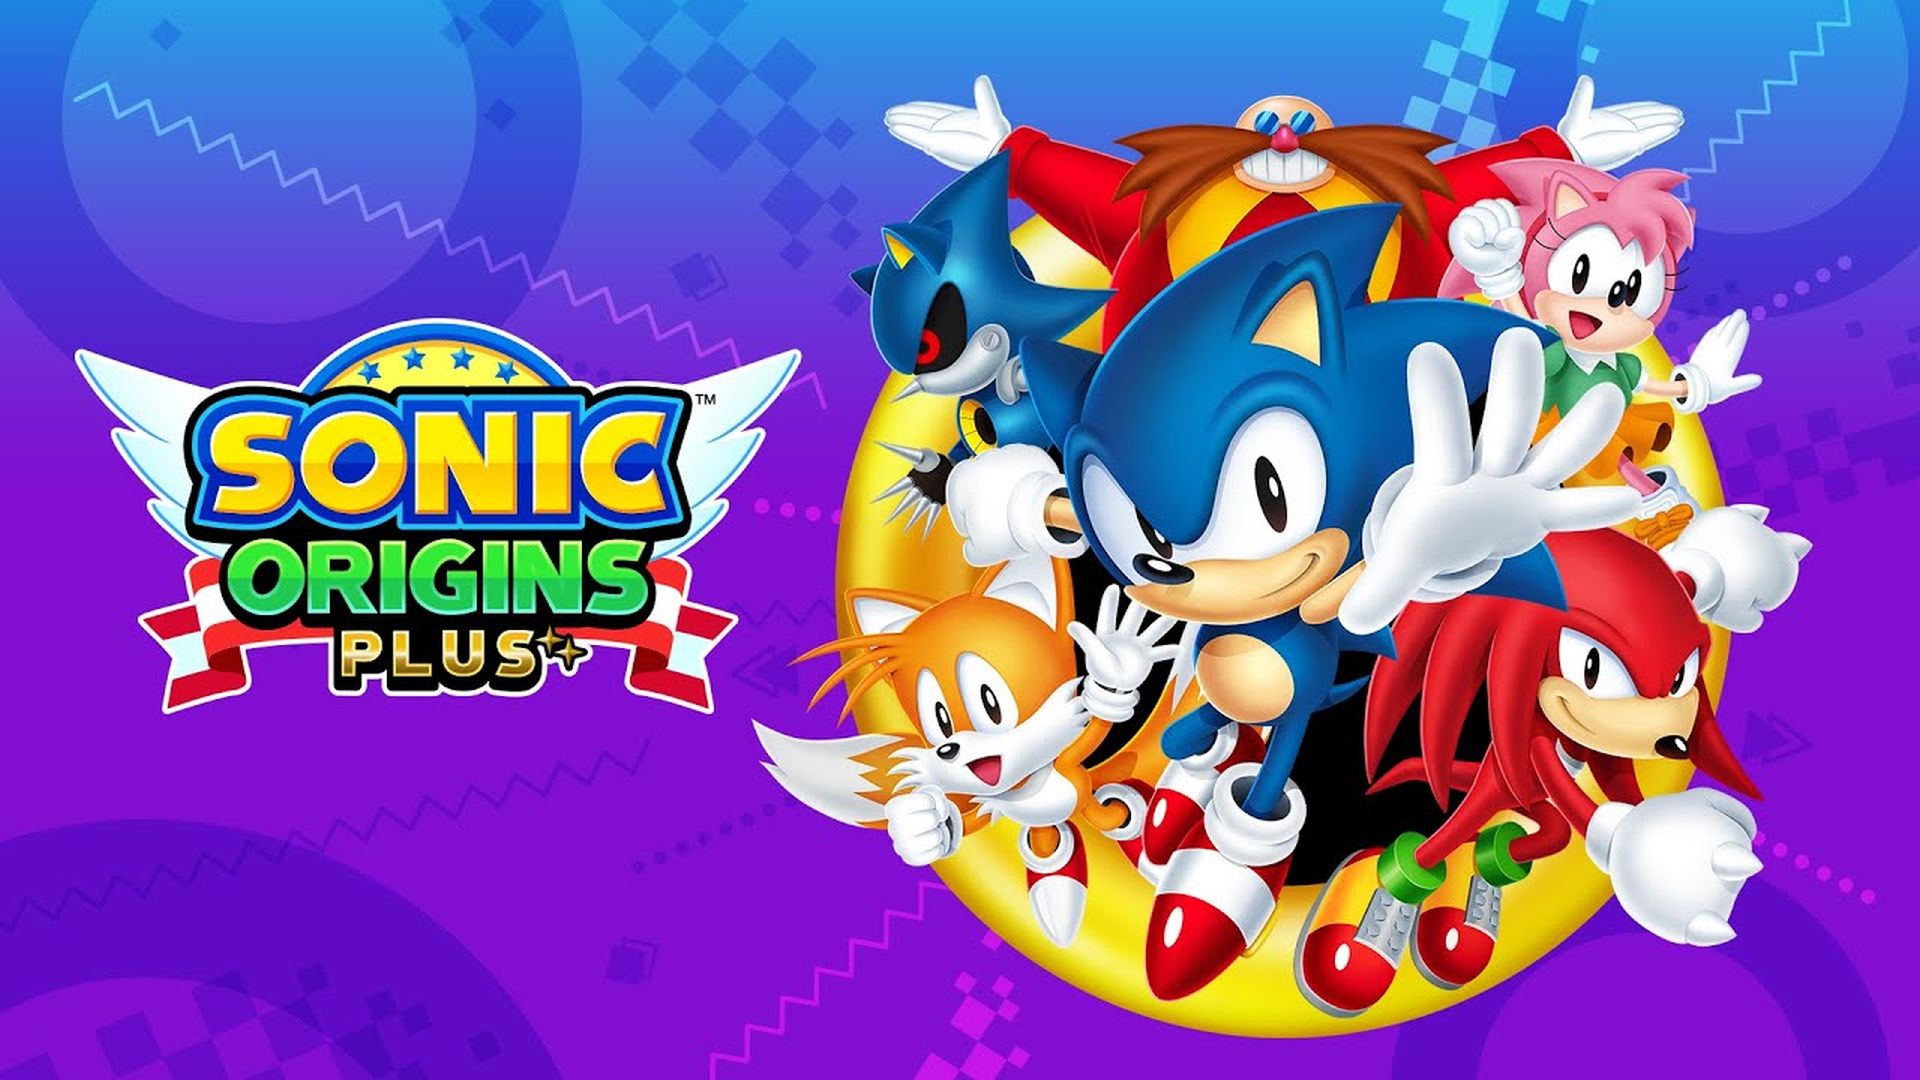 Sonic Origins Plus Receives New Trailer Ahead of Launch